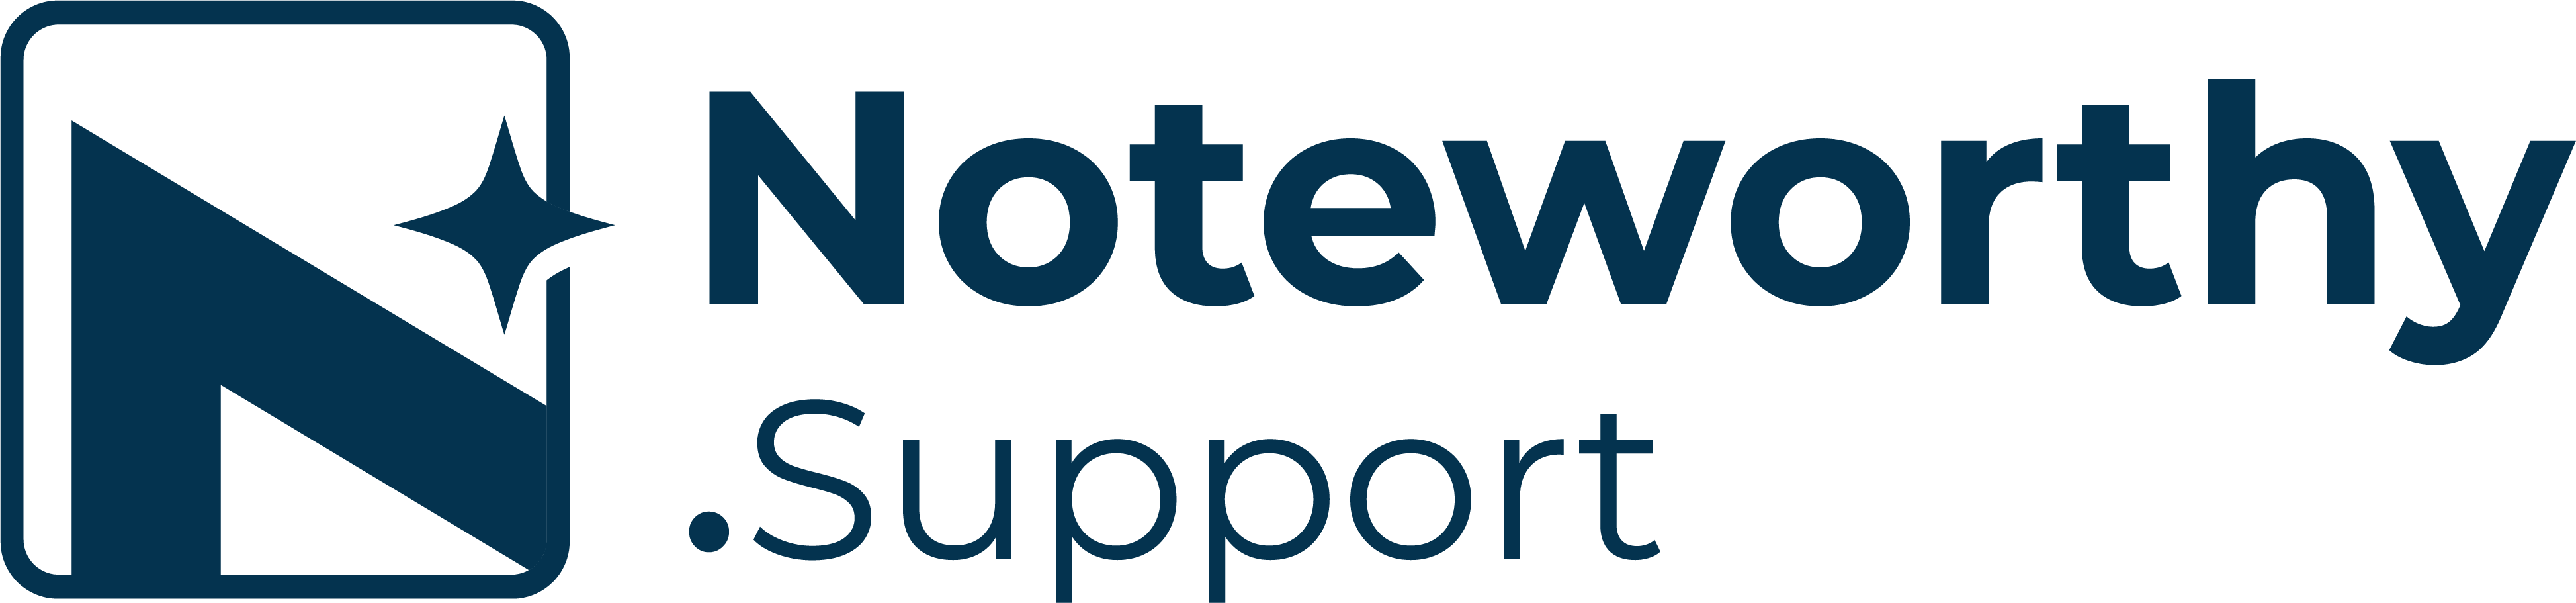 The Noteworthy (Microsoft Partner Center Pros) logo